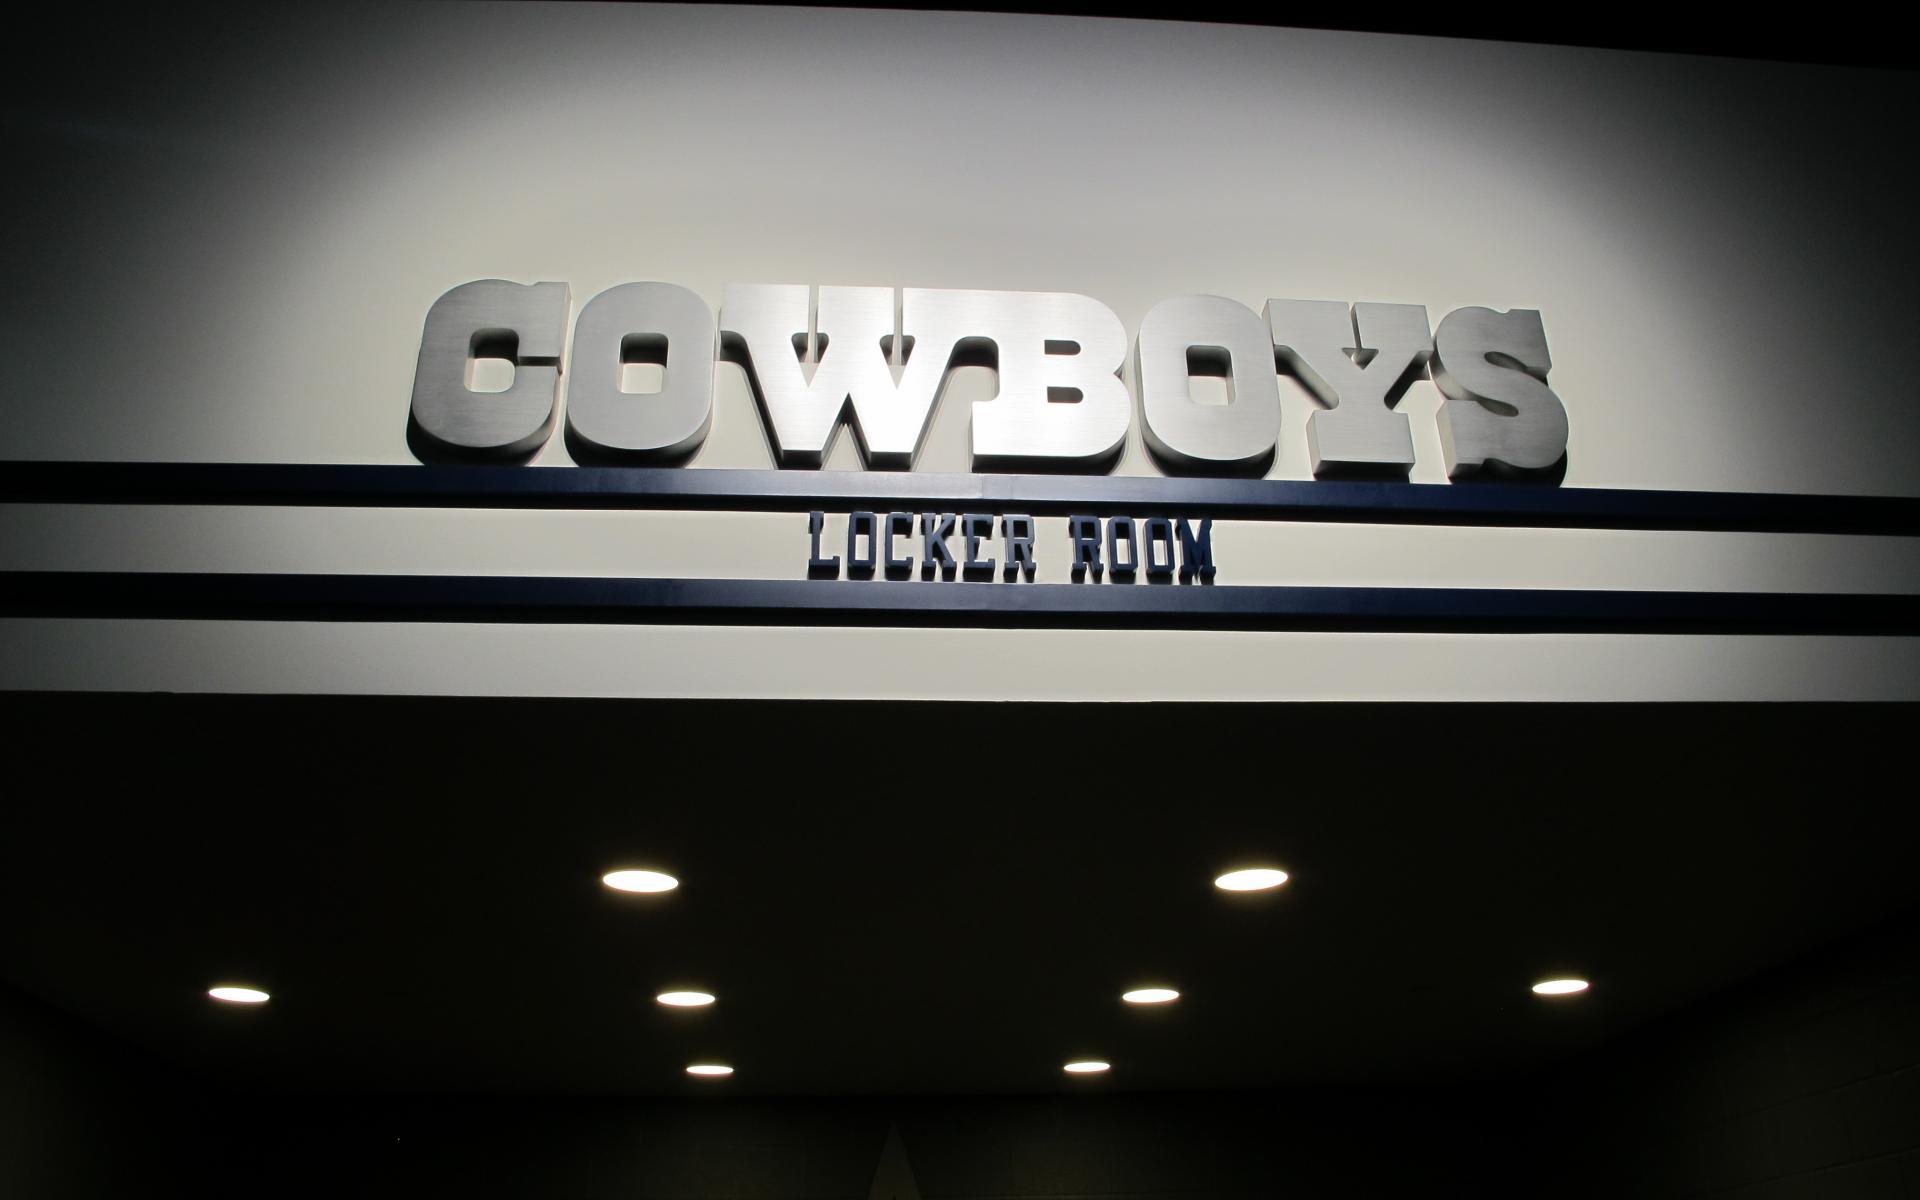 Dallas Cowboys Wallpapers Free Download | PixelsTalk.Net